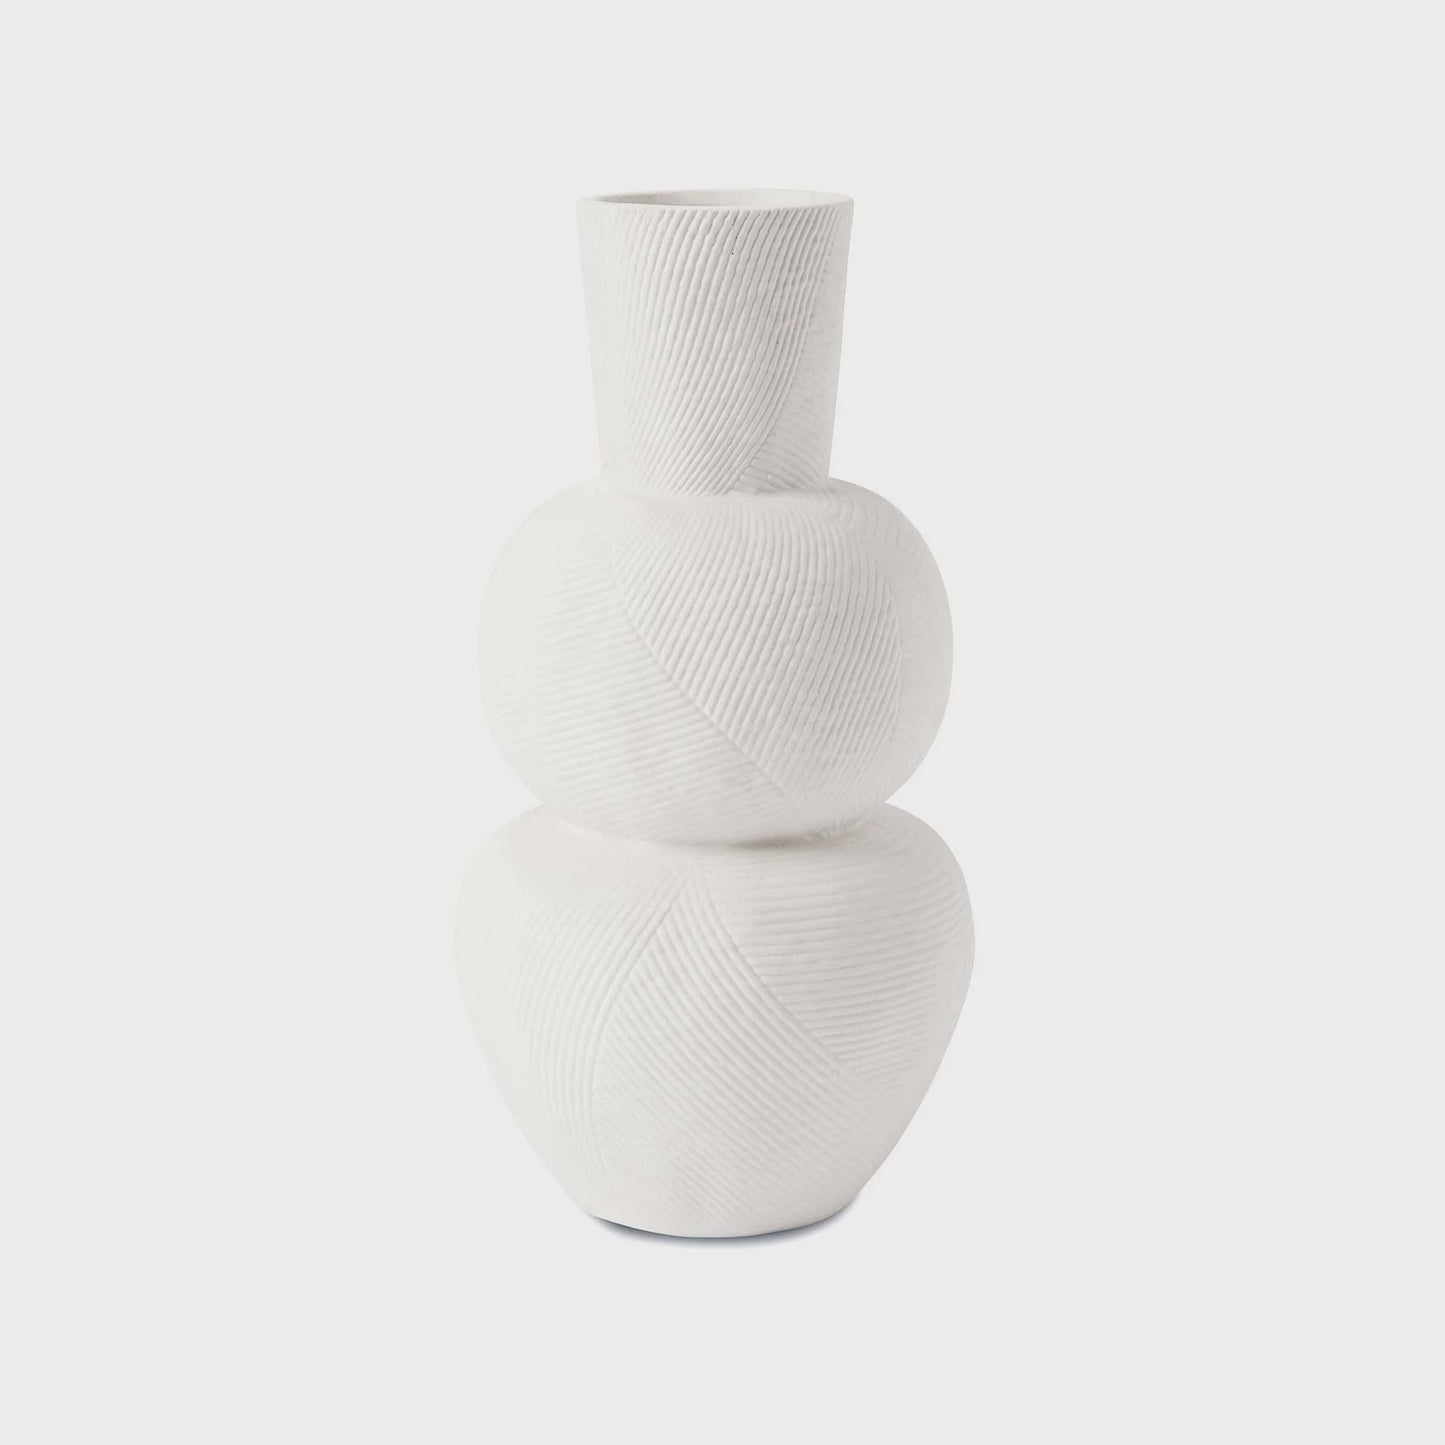 Rippled Textured Natural Clay Vase